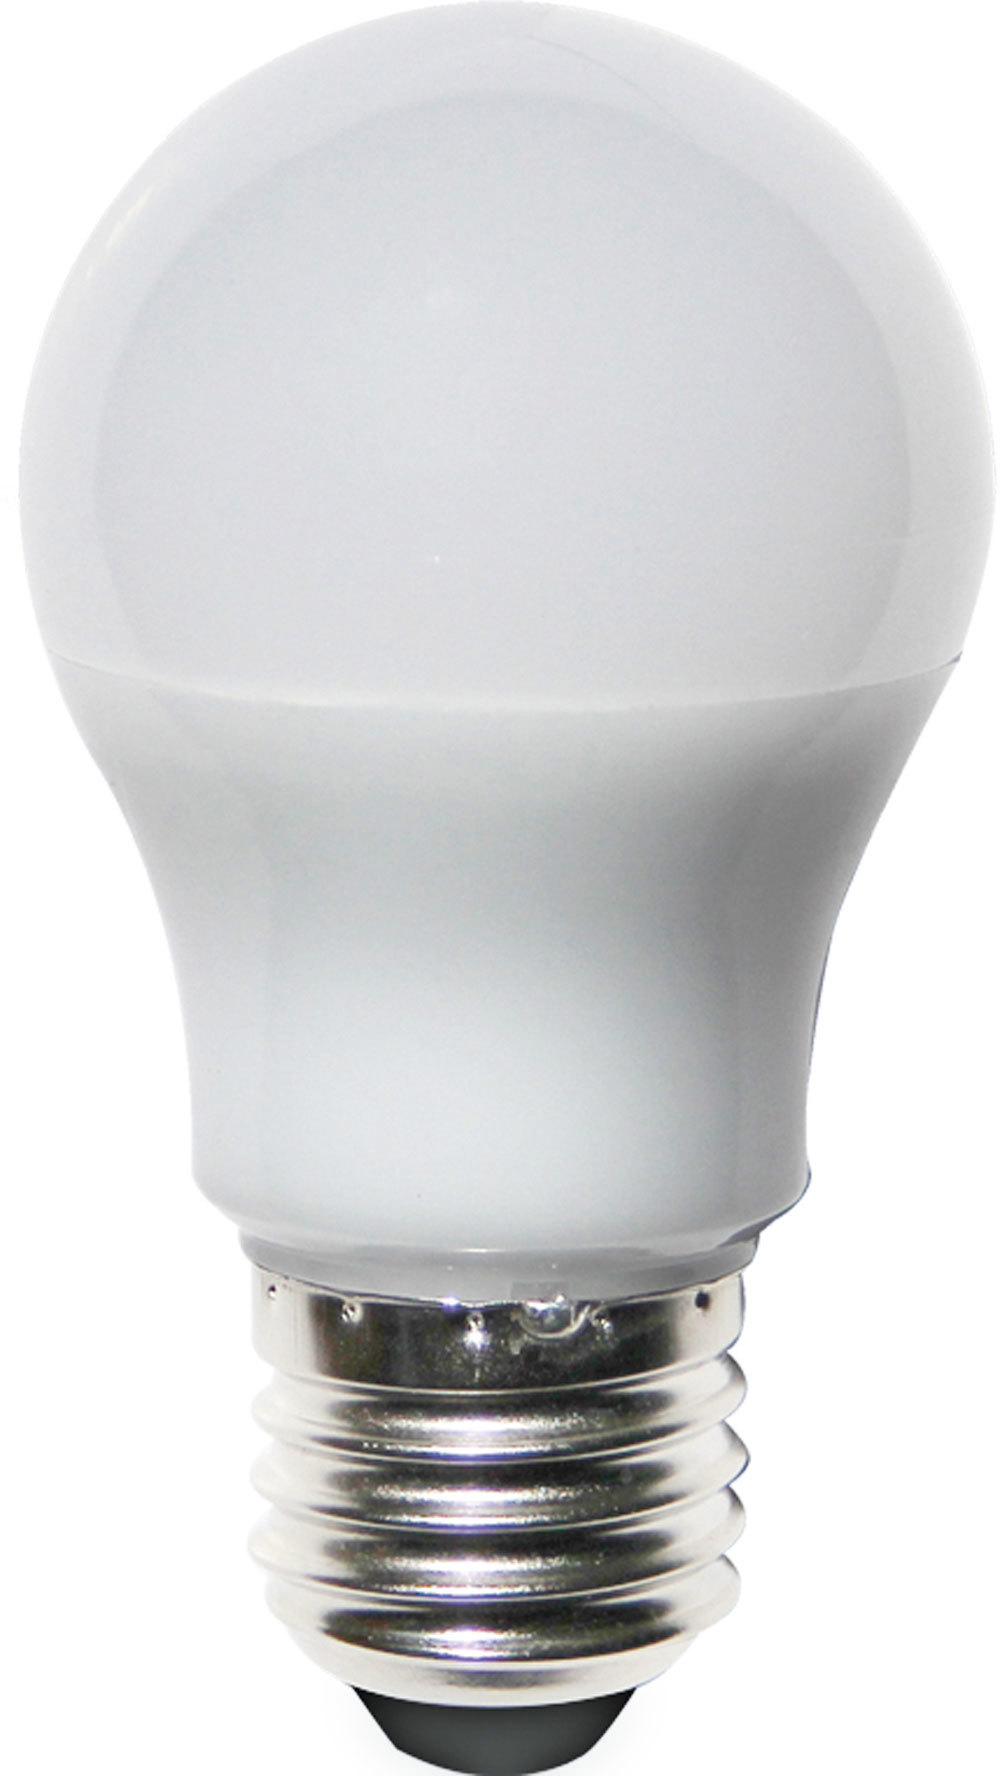 90121245 Лампа Premium светодионая E27 7 Вт груша 560 Лм теплый свет STLM-0112414 ECOLA